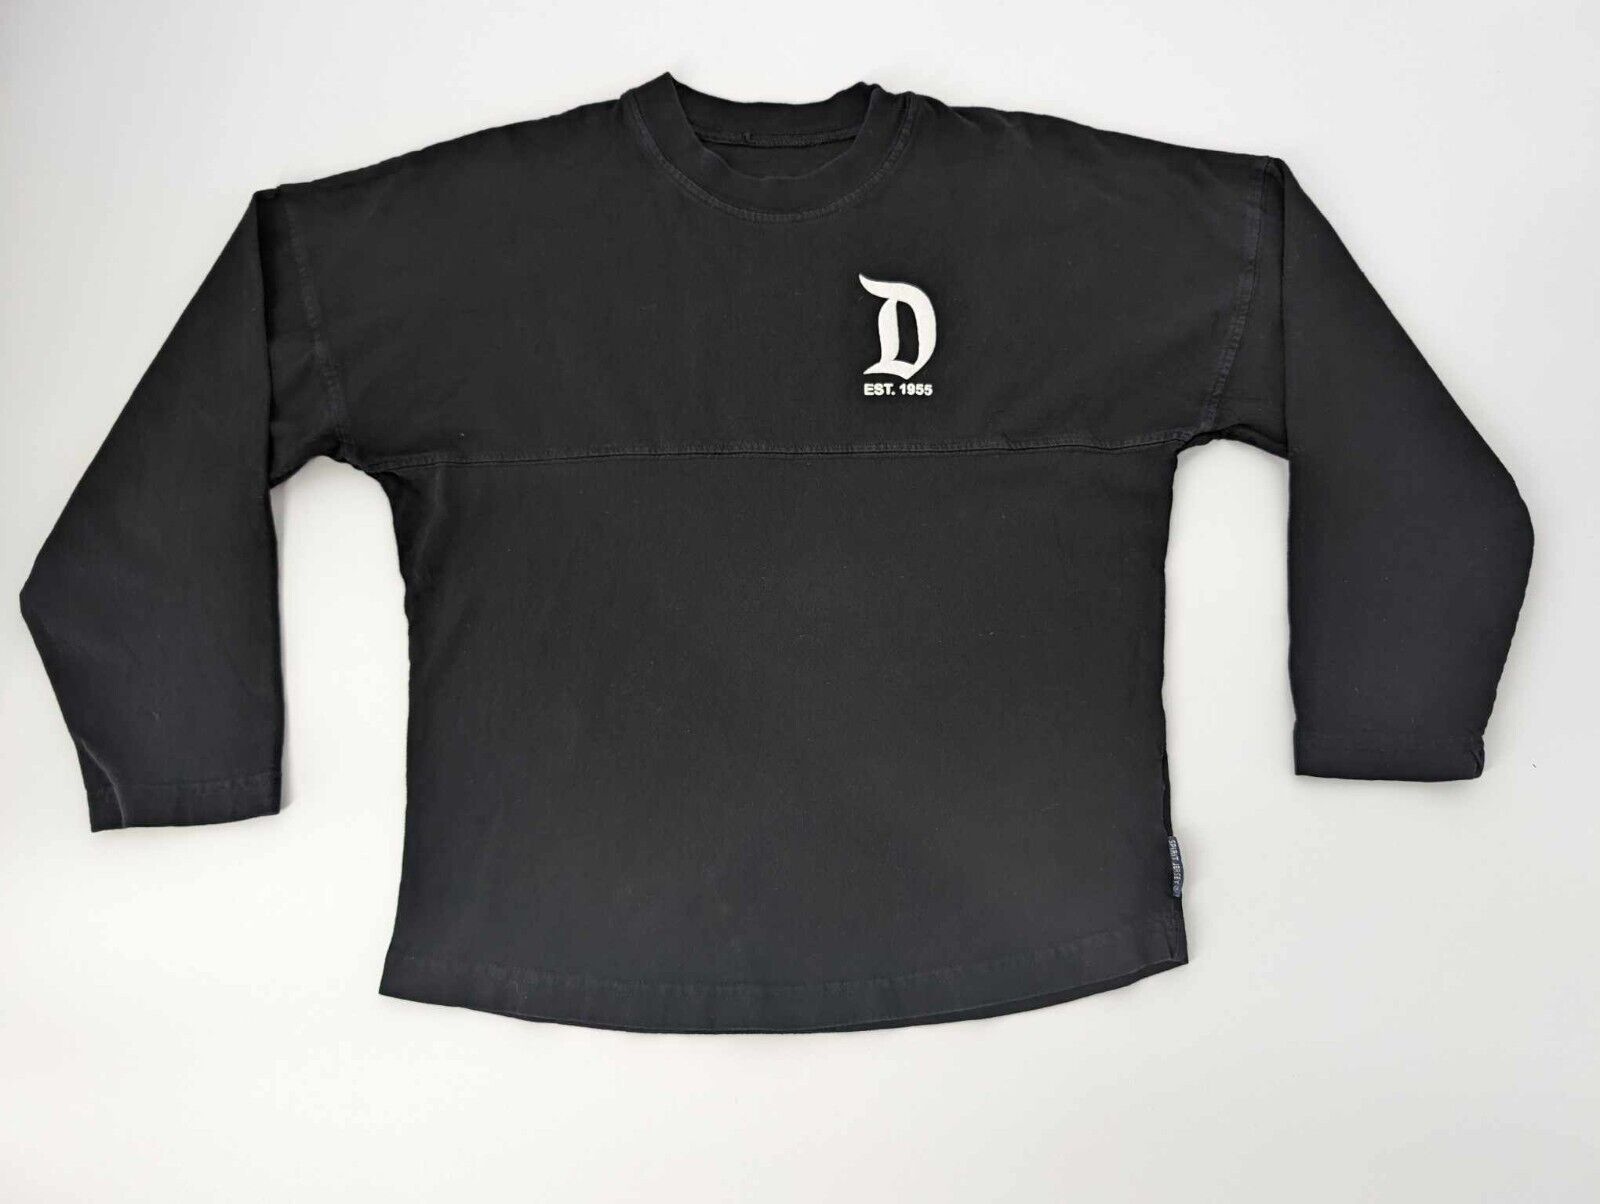 Disneyland Parks Spirit Jersey Large Authentic Black White Puff Print Shirt